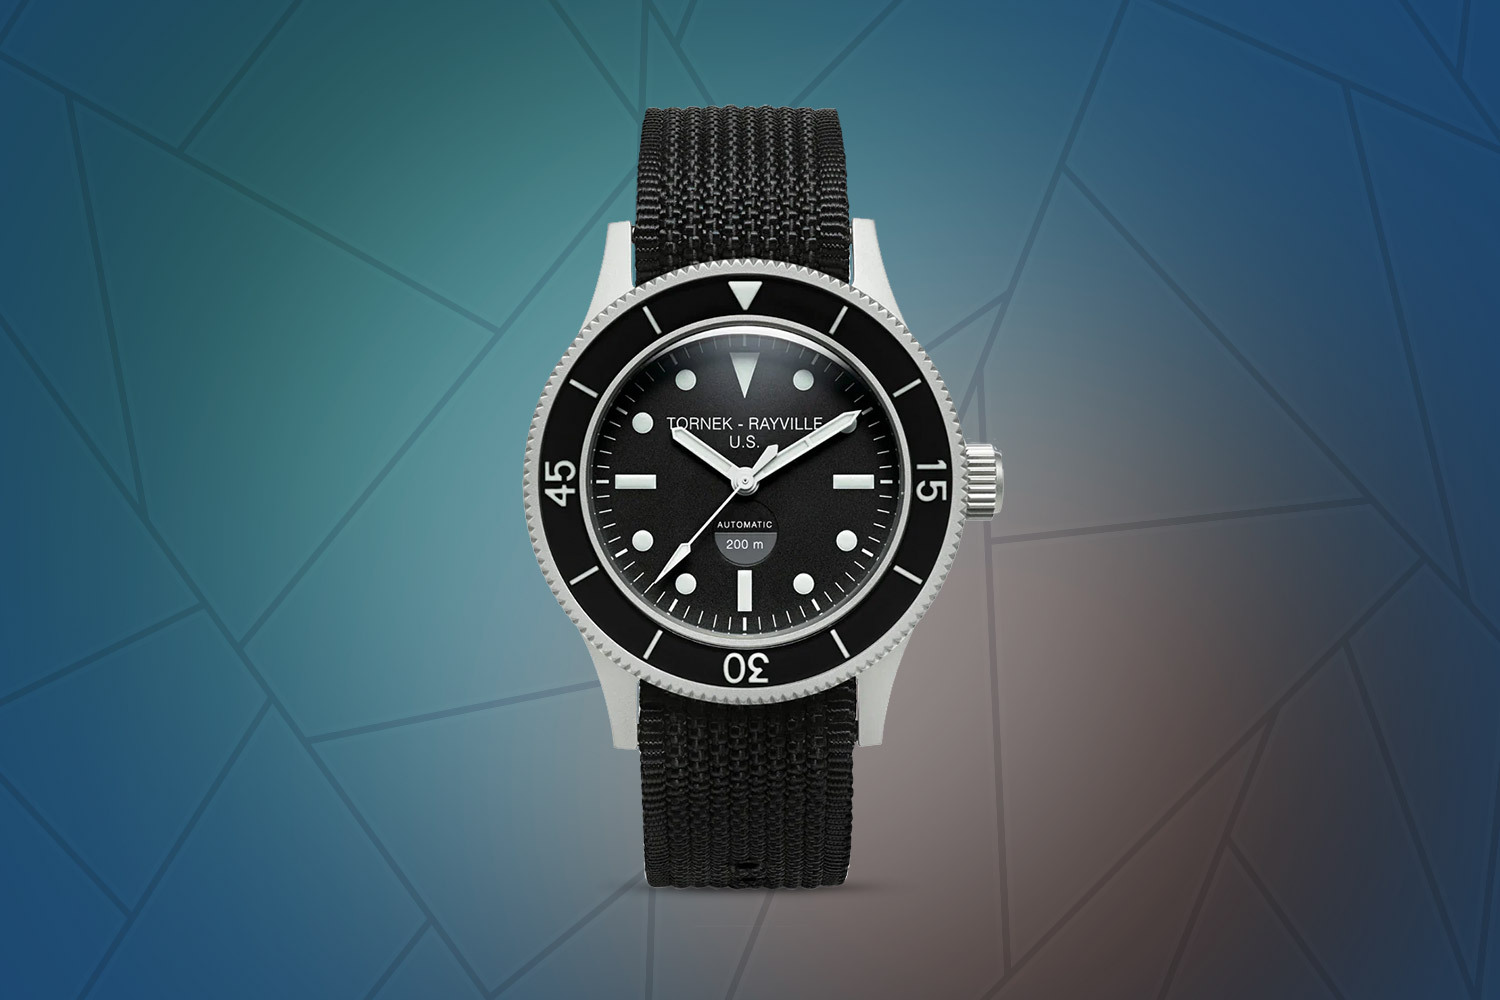 TR-660 watch